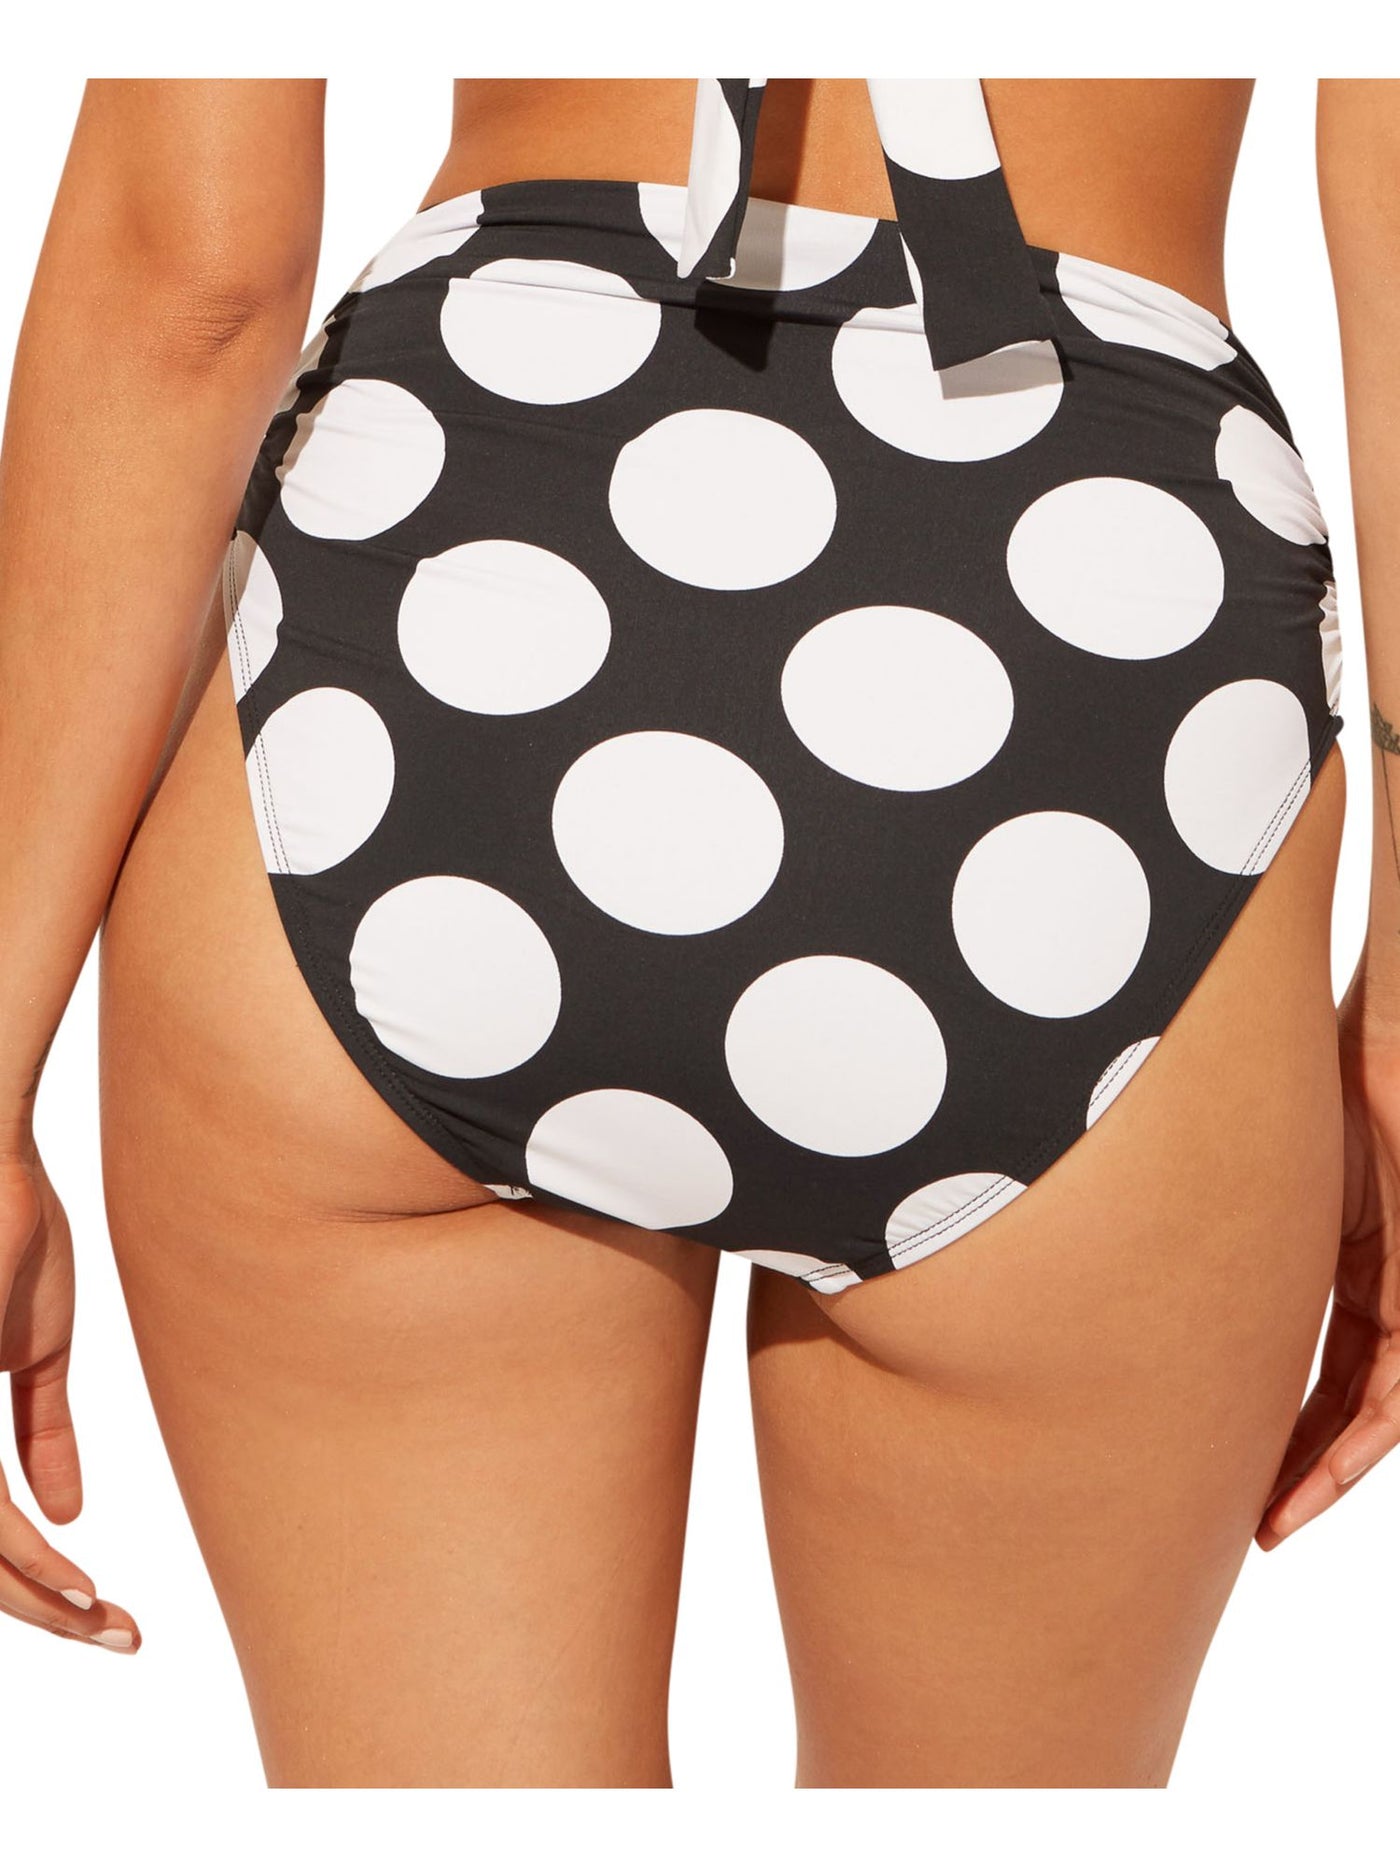 BLEU Women's White Polka Dot Stretch Ruched Bikini Full Coverage High Waisted Swimsuit Bottom 8